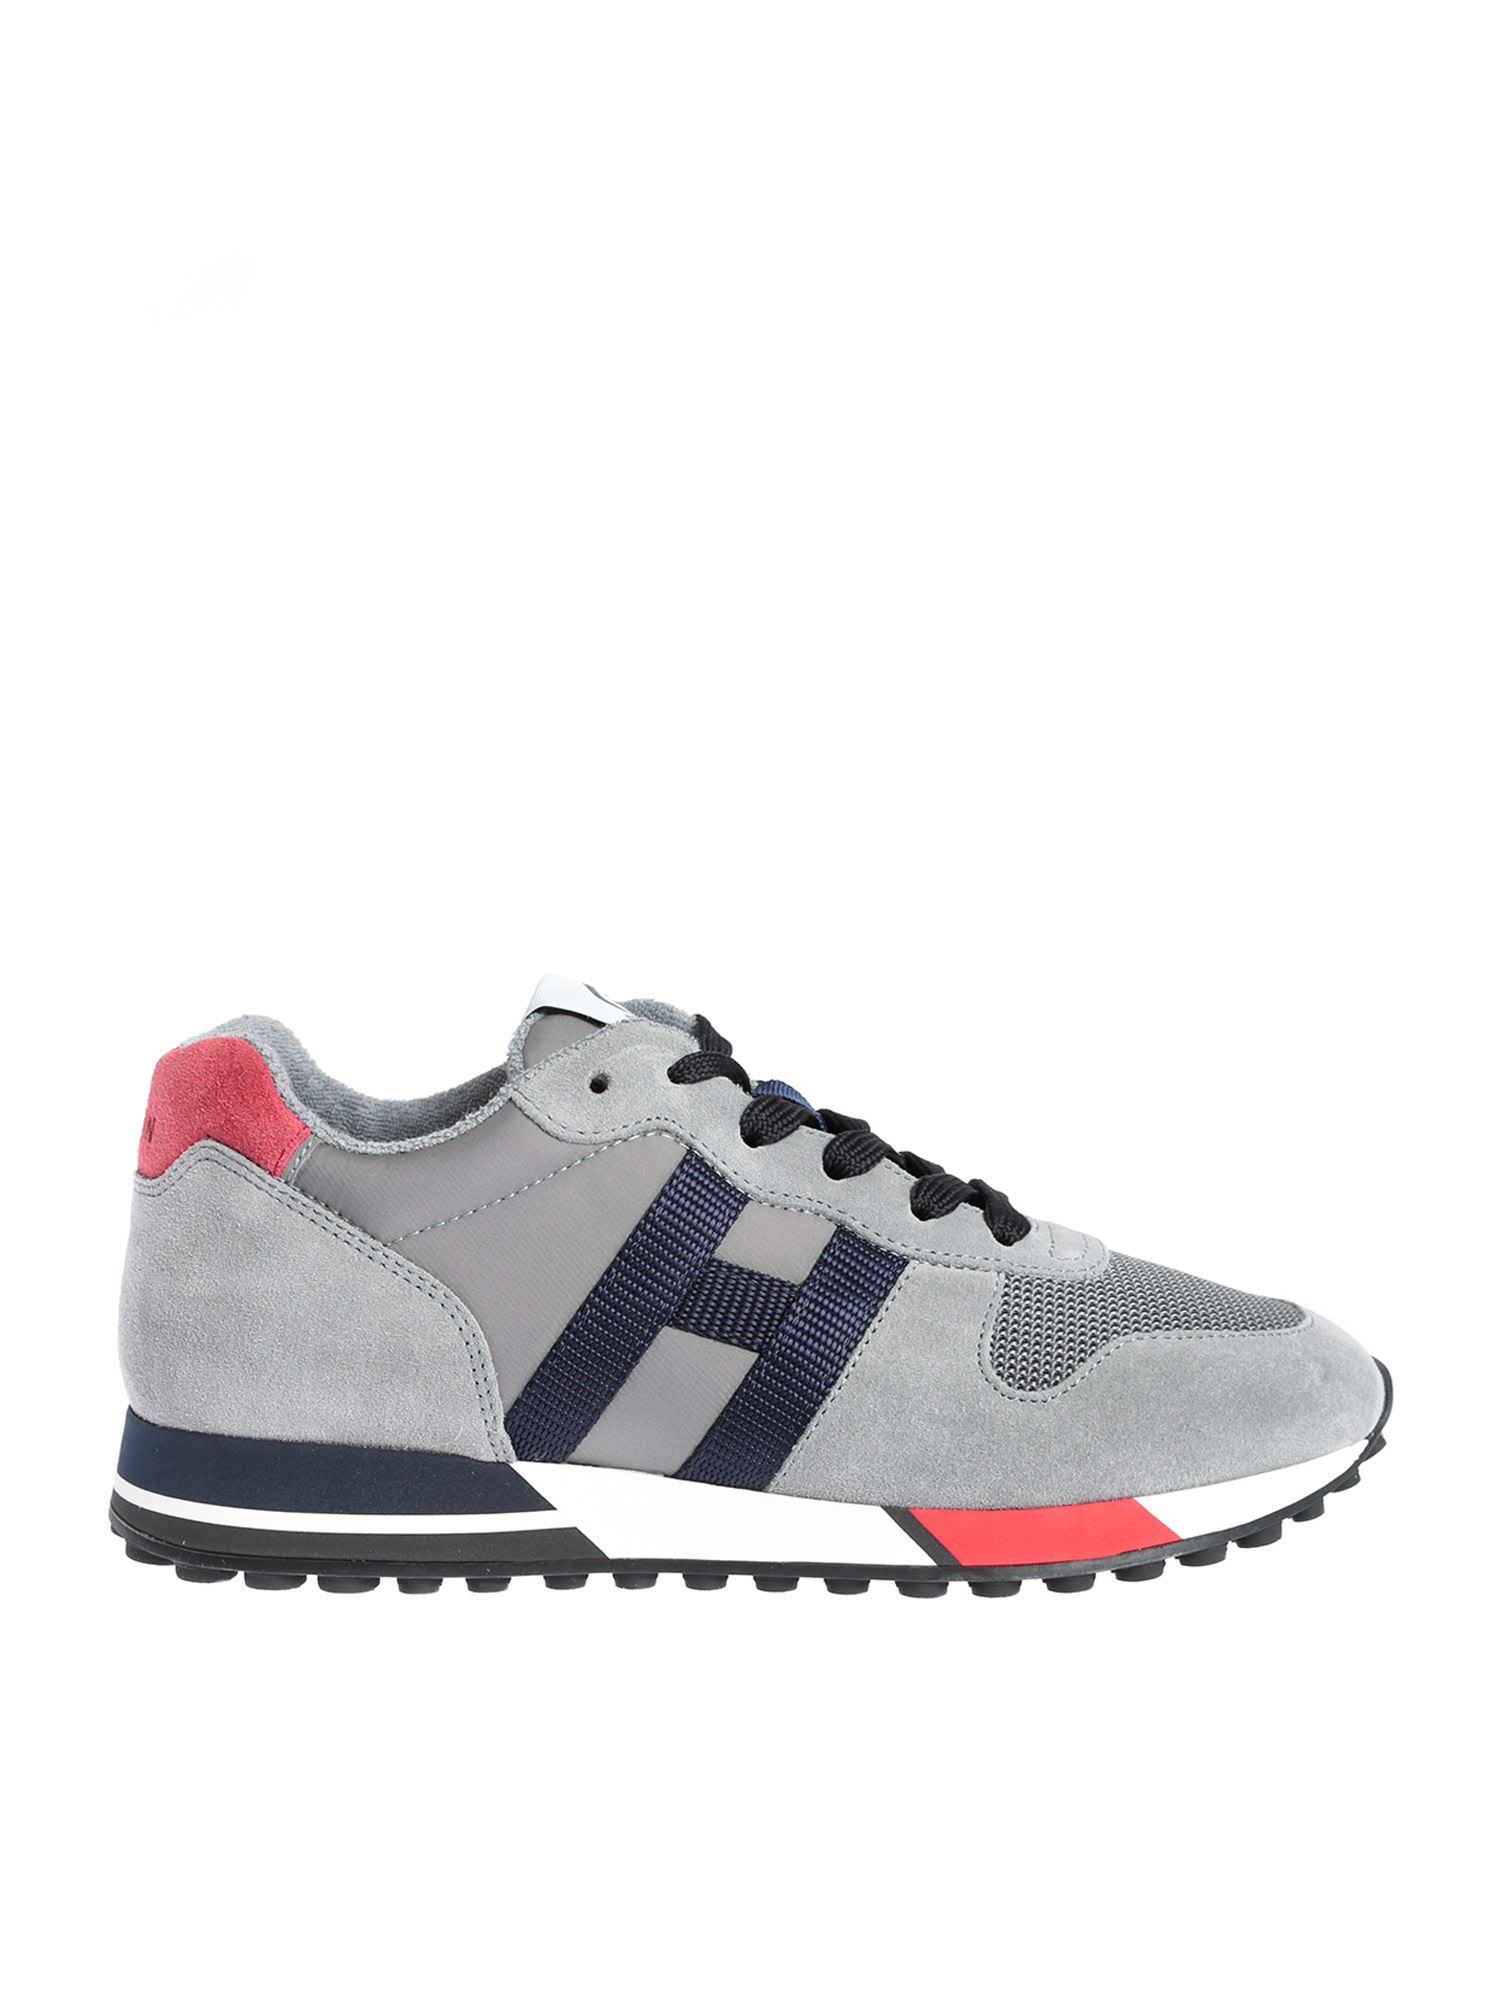 Hogan H383 Sneakers In Grey